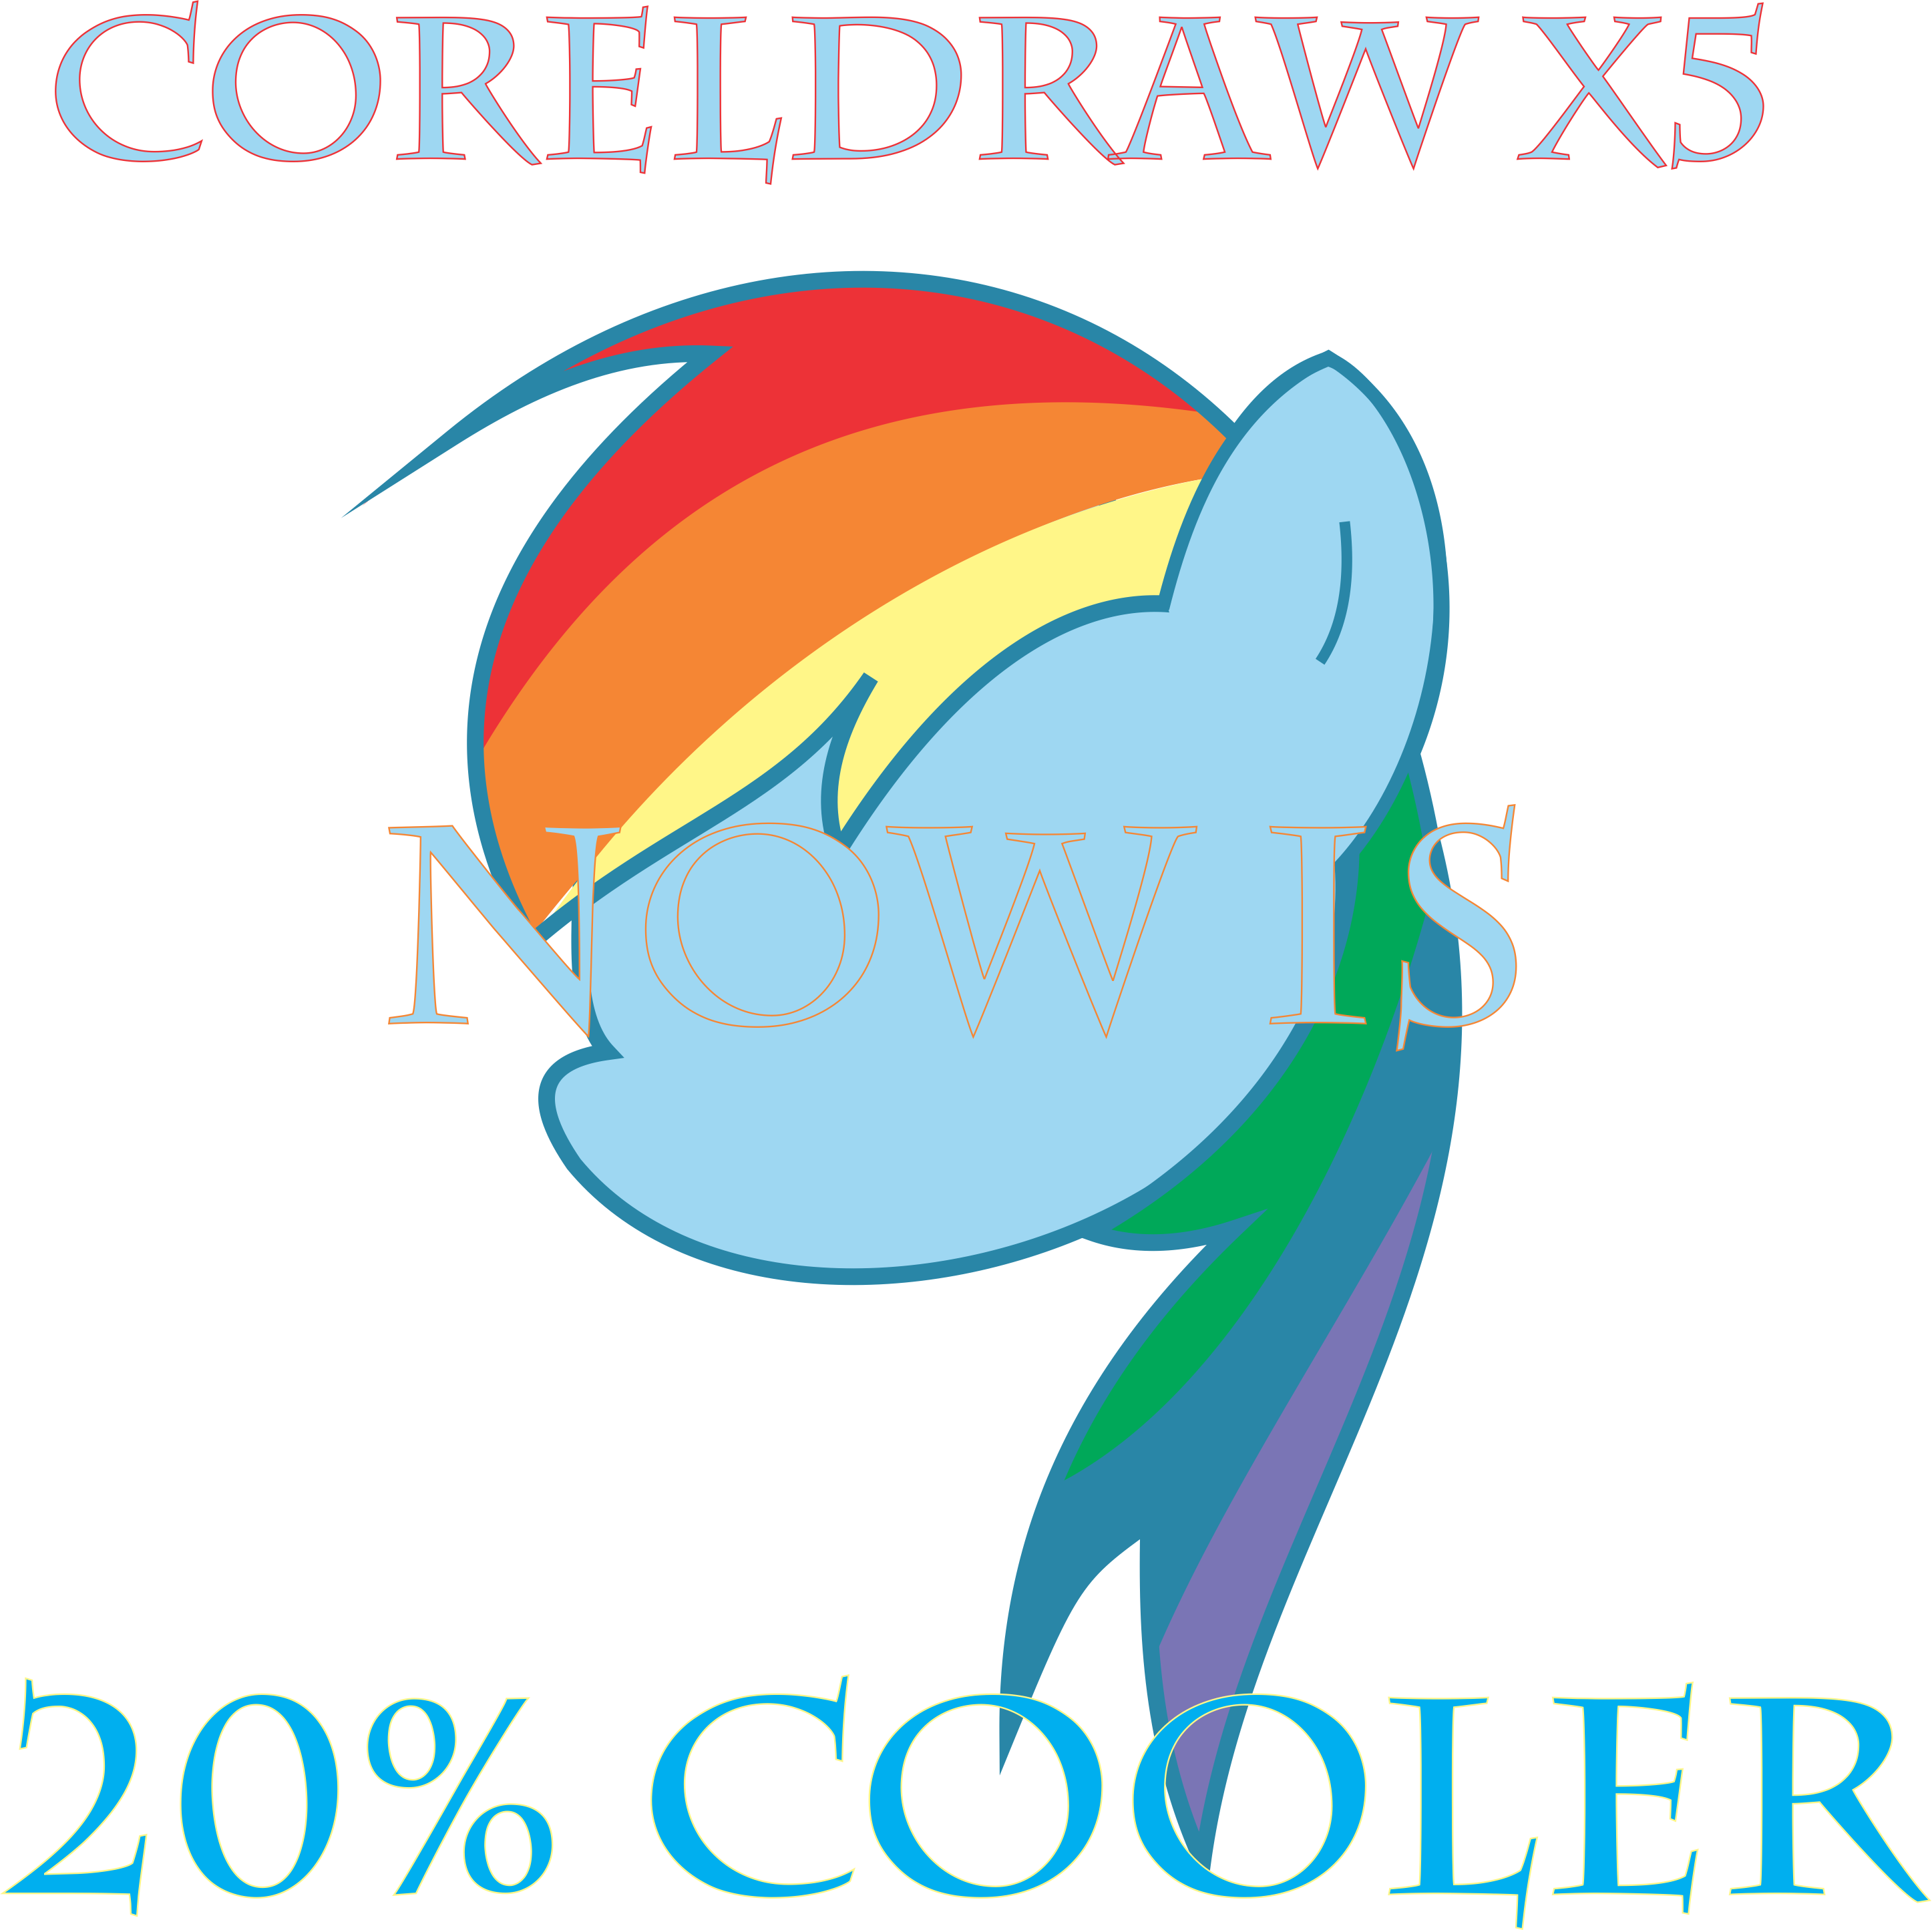 Corel Draw 2017 X5 With Keygen Free Download For Windows - Arch Enemy (2893x2890)